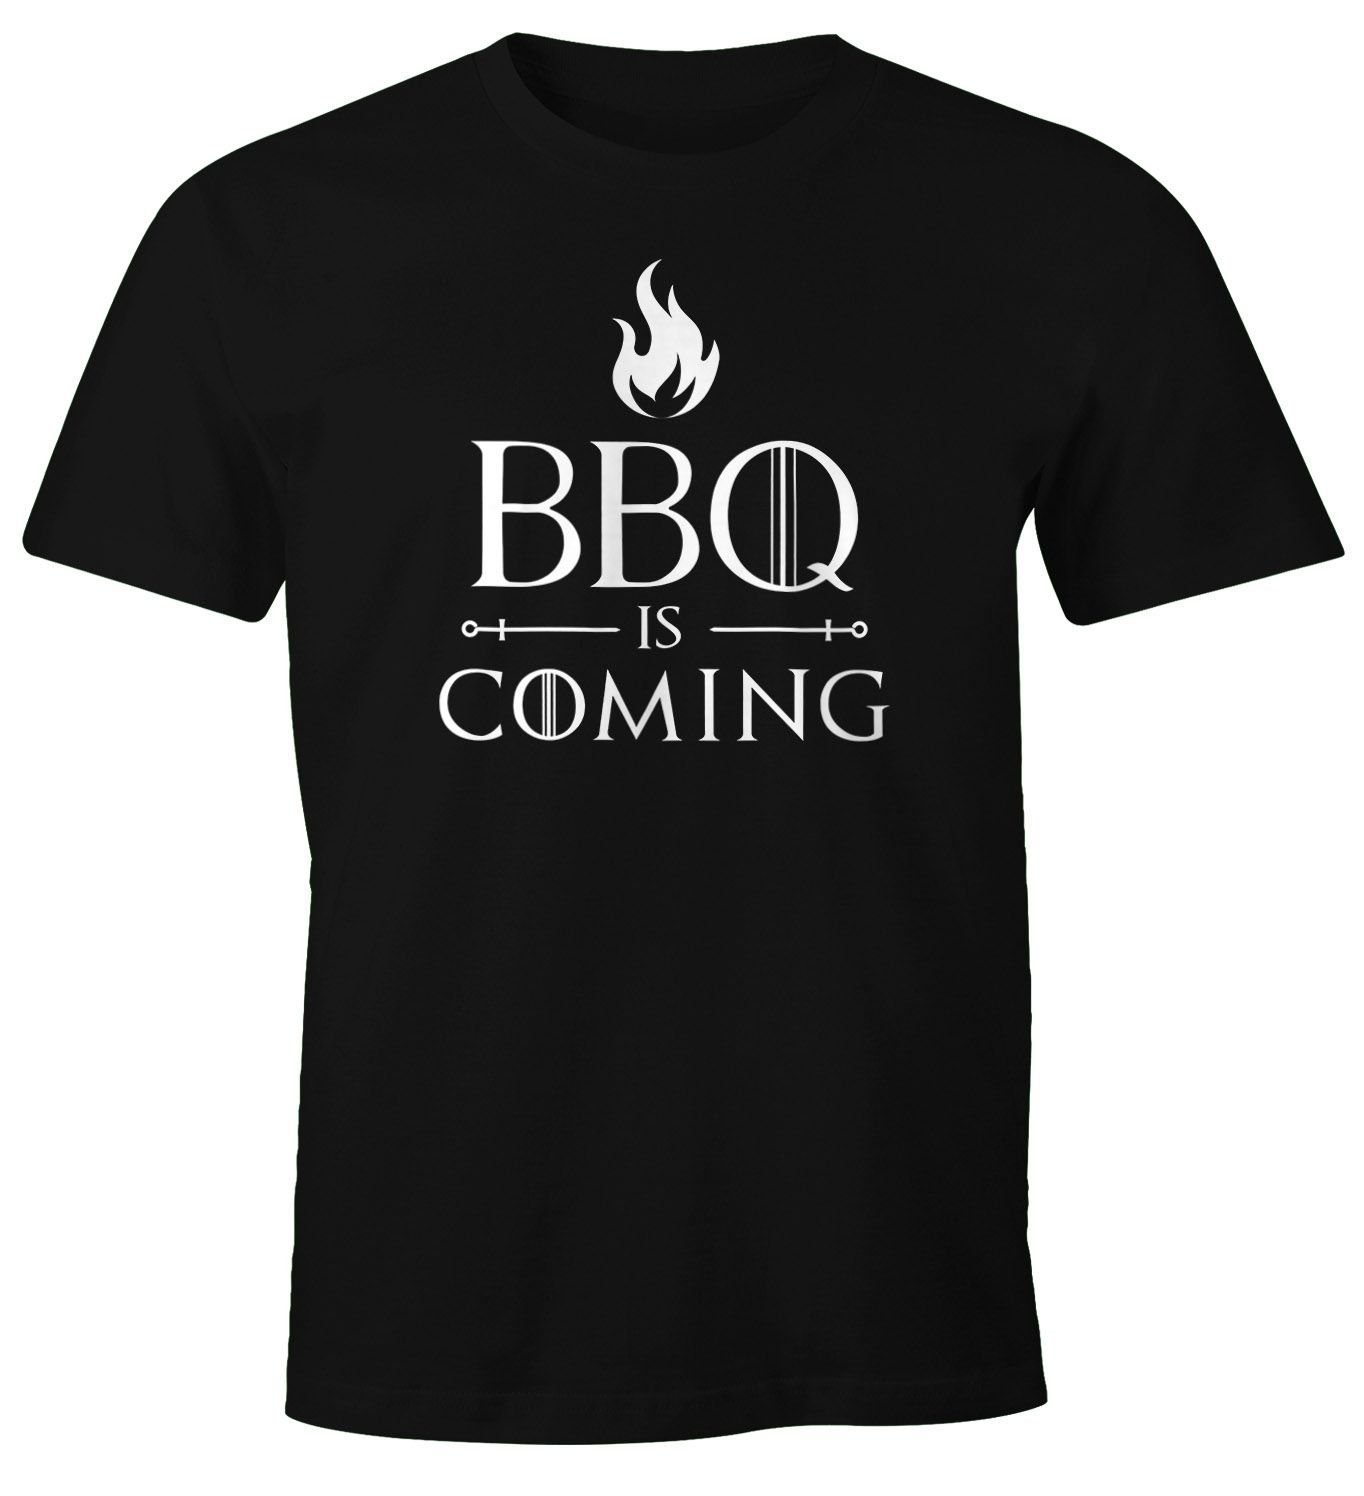 lustig Print MoonWorks mit Spruch Herren Is Coming T-Shirt Fun-Shirt Grillen BBQ Moonworks® Barbecue Print-Shirt